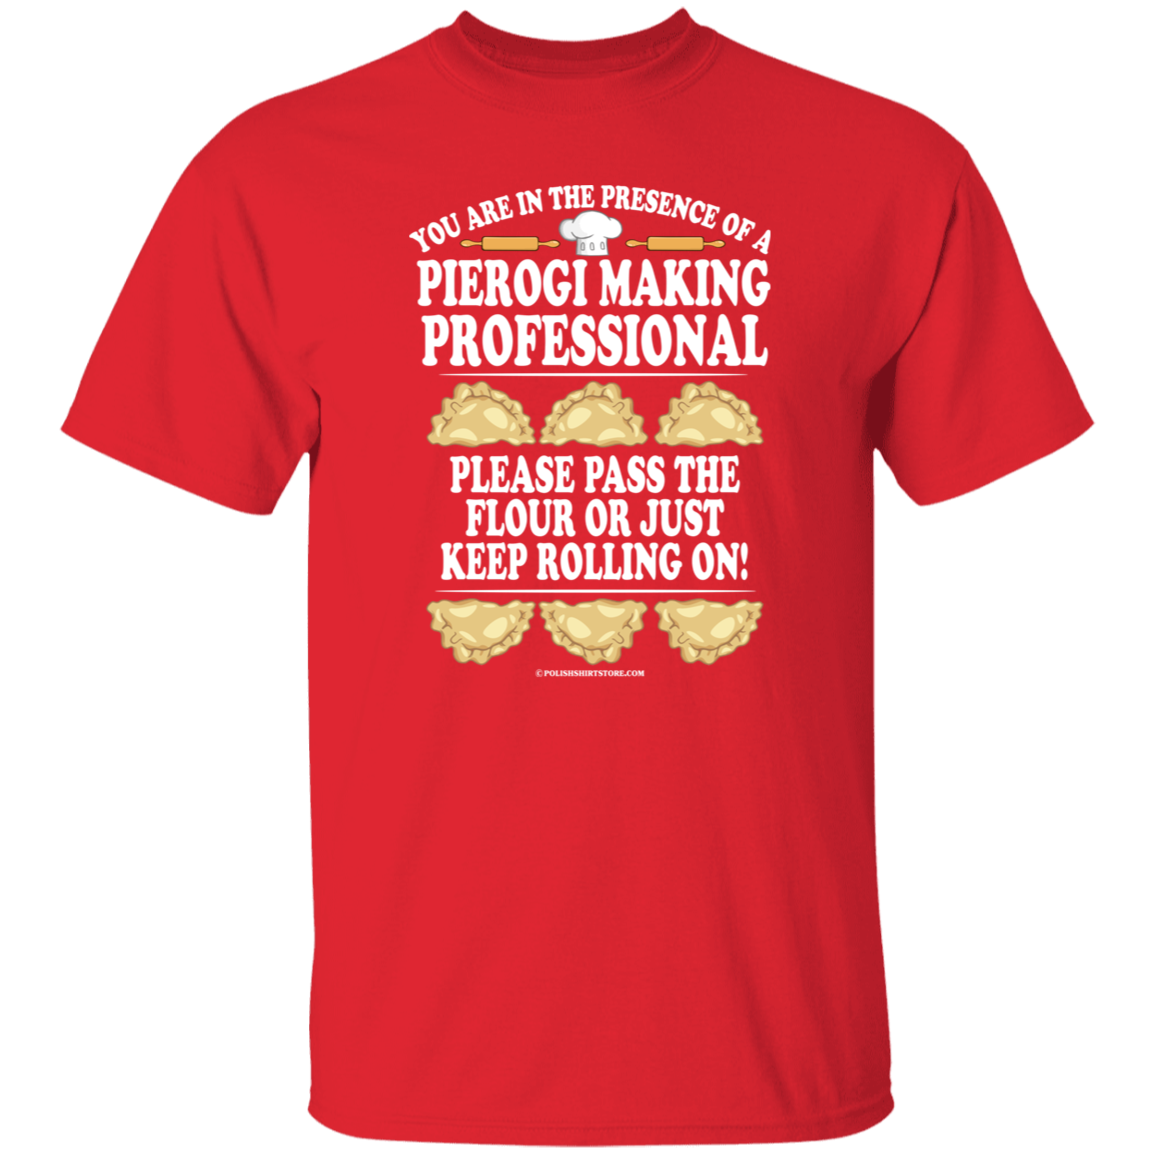 Pierogi Making Professional T-Shirt Apparel CustomCat G500 5.3 oz. T-Shirt Red S